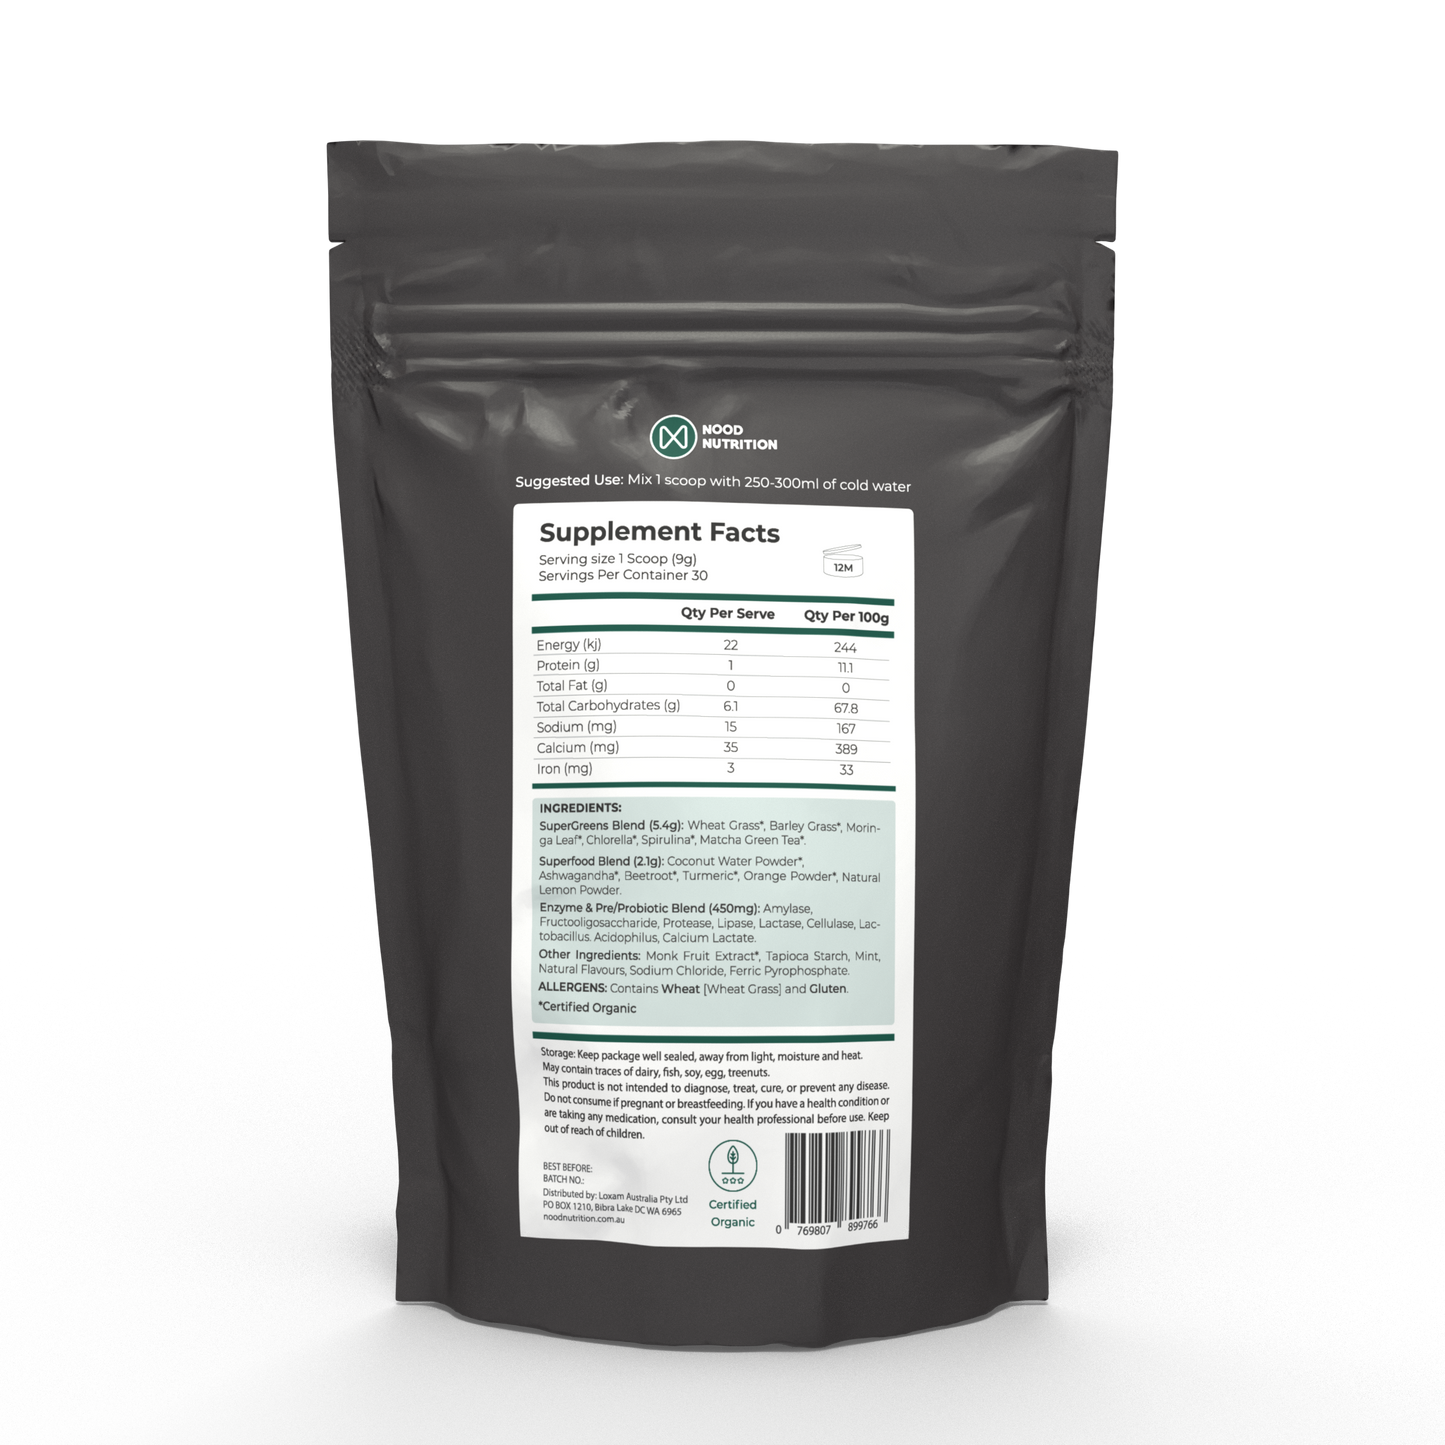 Super Greens Elixir - Greens Powder - Nood Nutrition Label Information